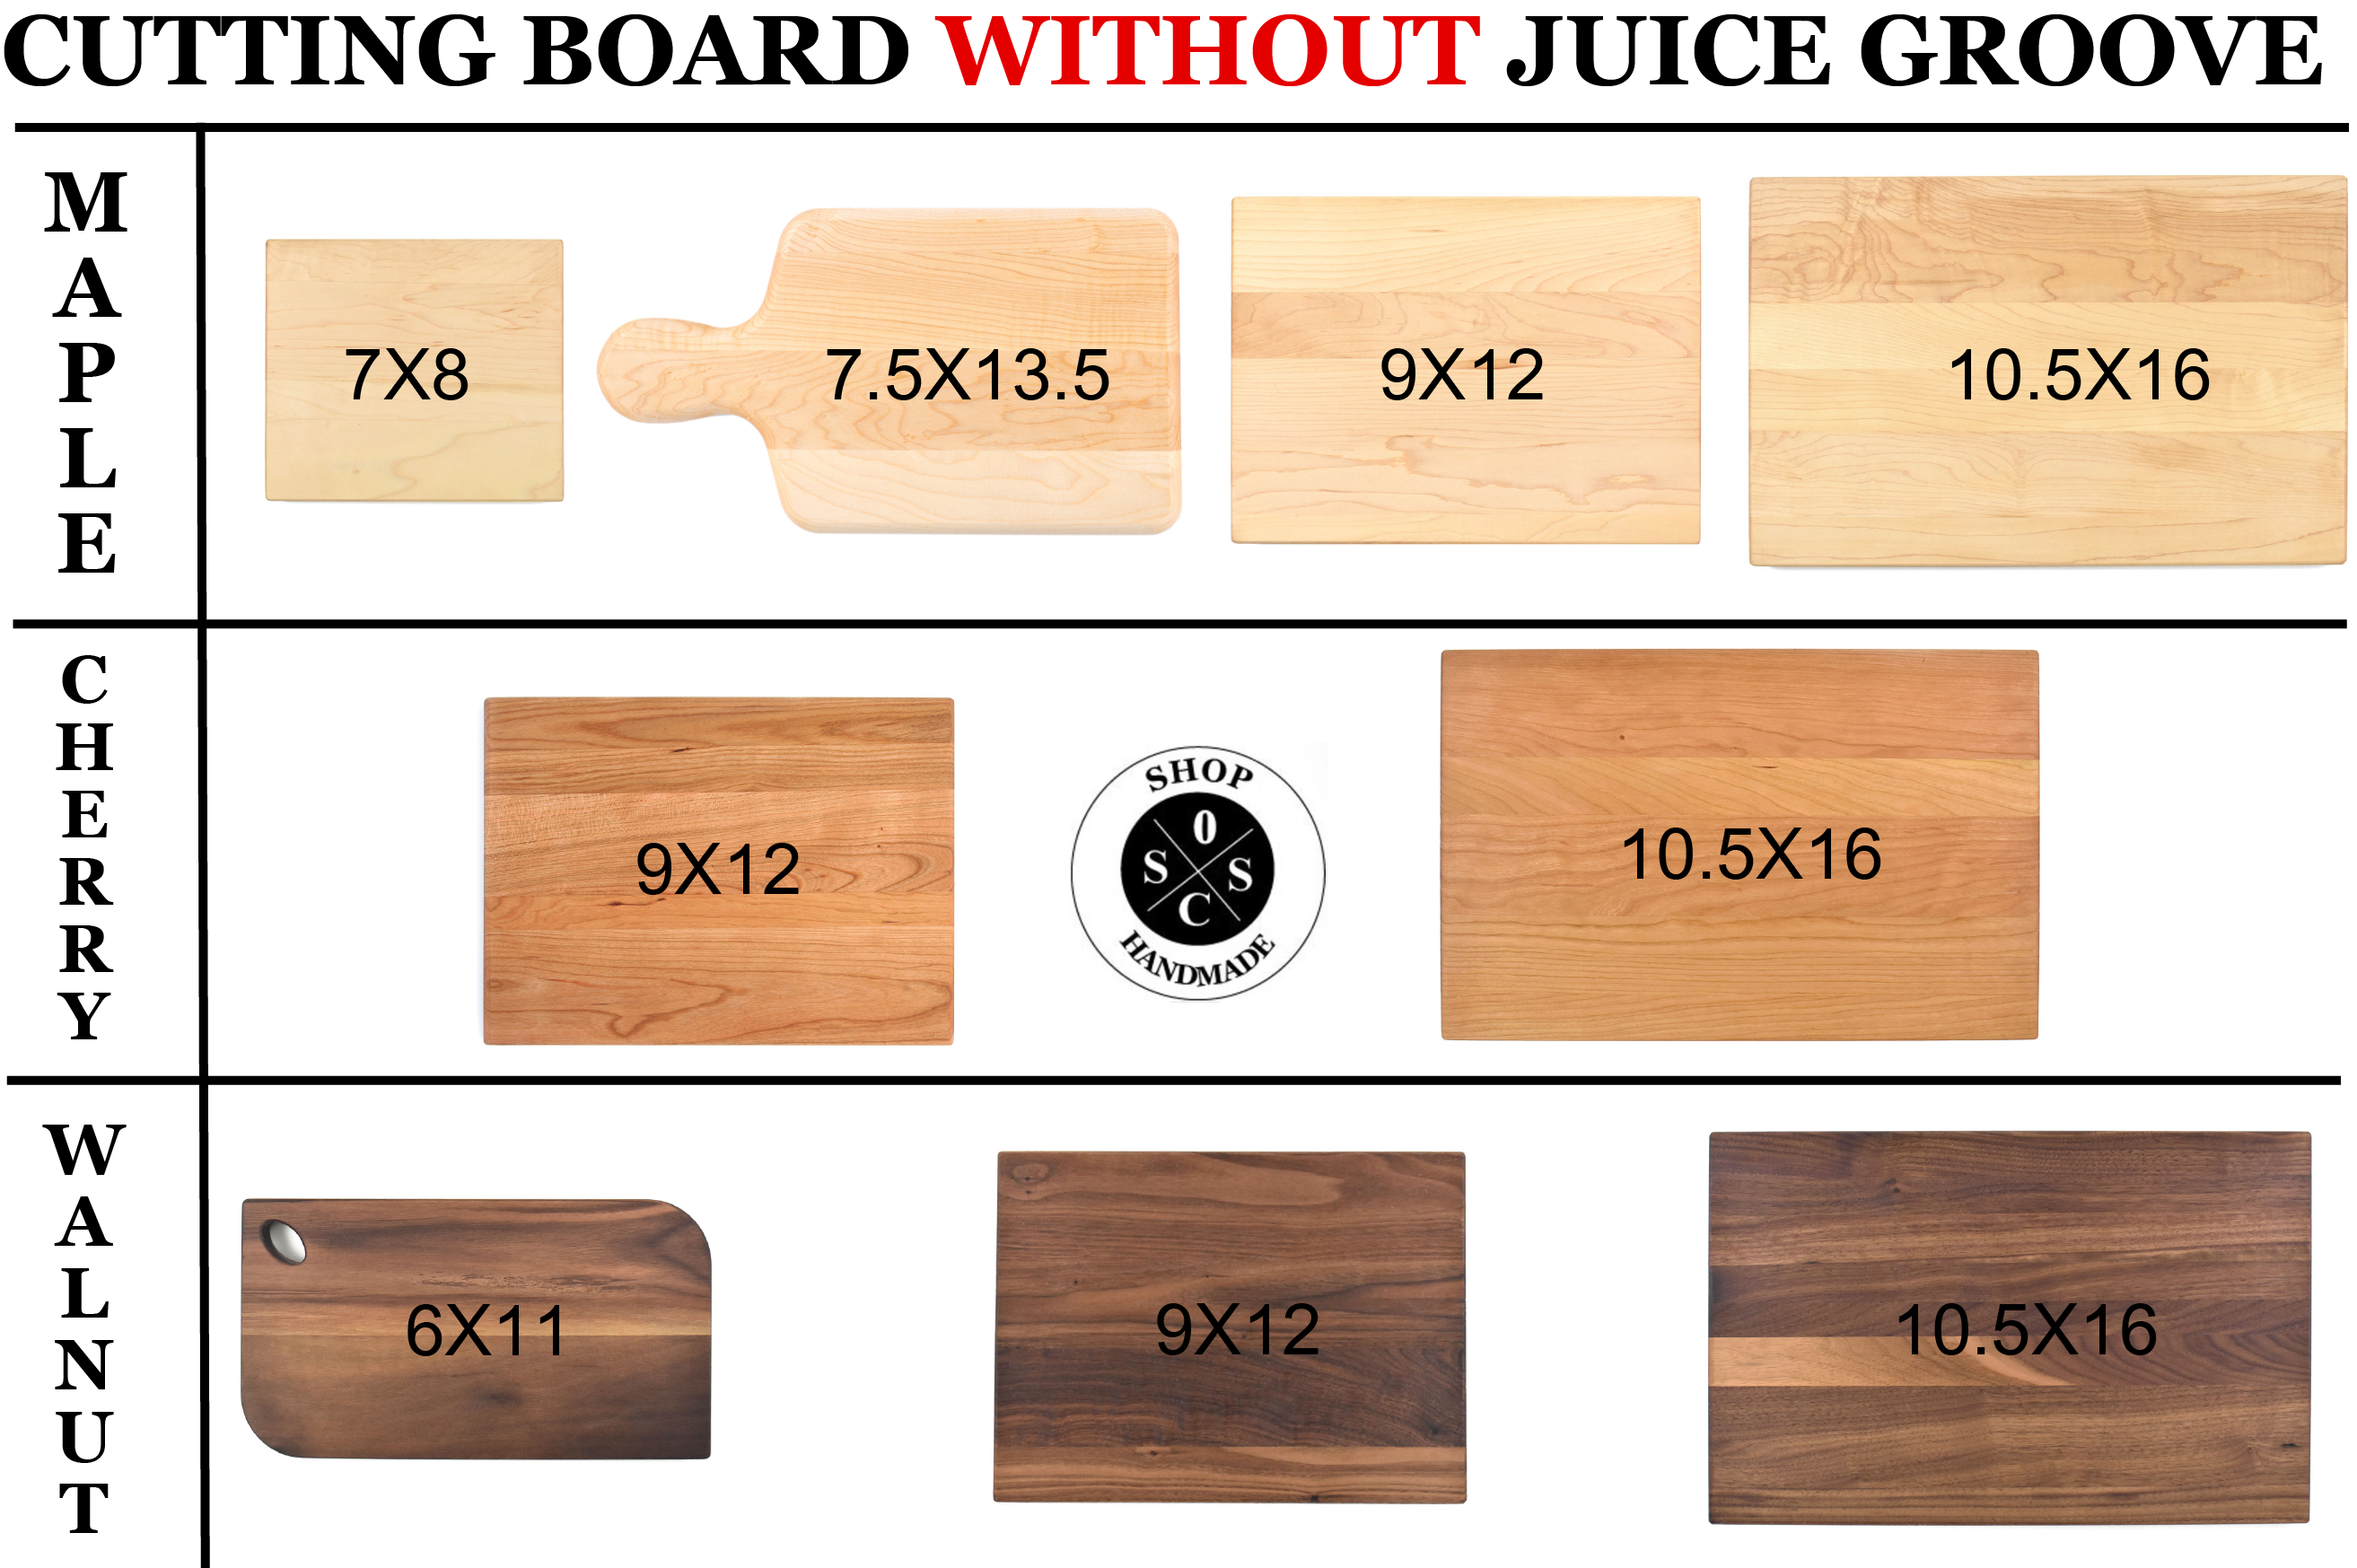 Personalized Cutting Board - Engraved Cutting Board, Custom Cutting Board, Wedding Gift, Housewarming Gift, Anniversary Gift, Closing Gift P